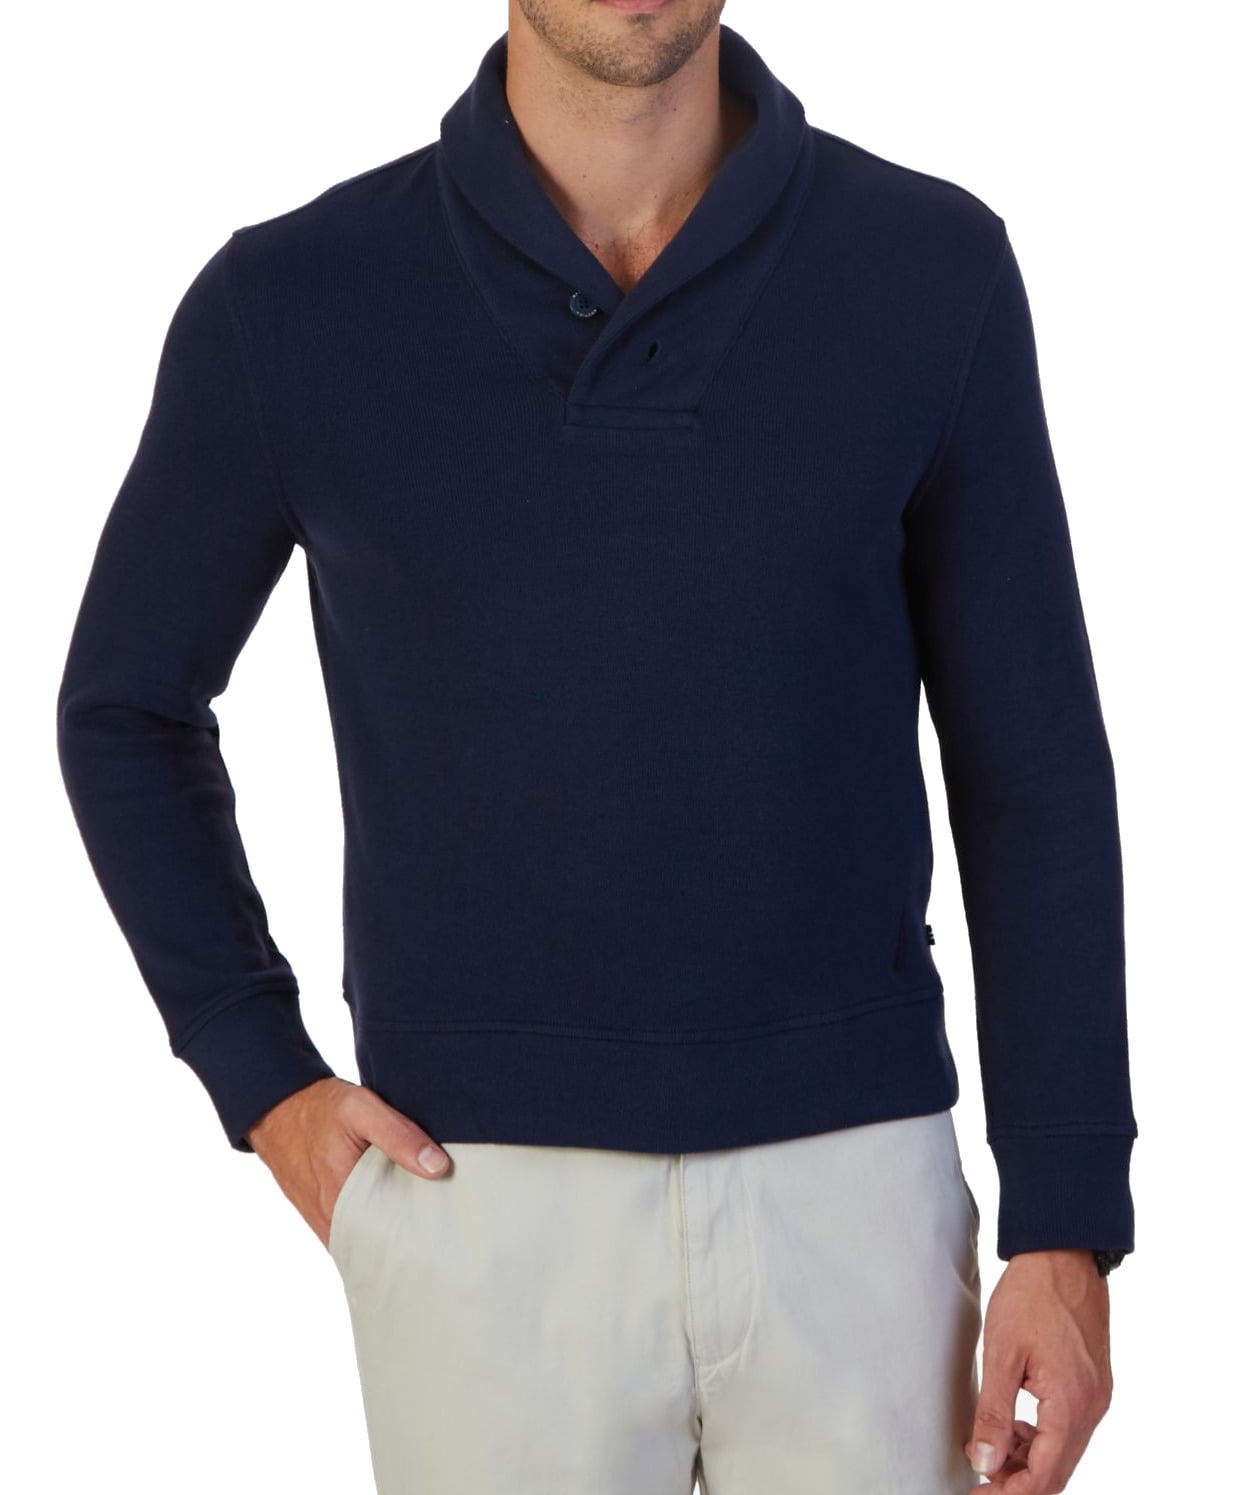 Nautica - NEW Navy Blue Mens Size 2XL V-Neck Fleece Knit Active Sweater